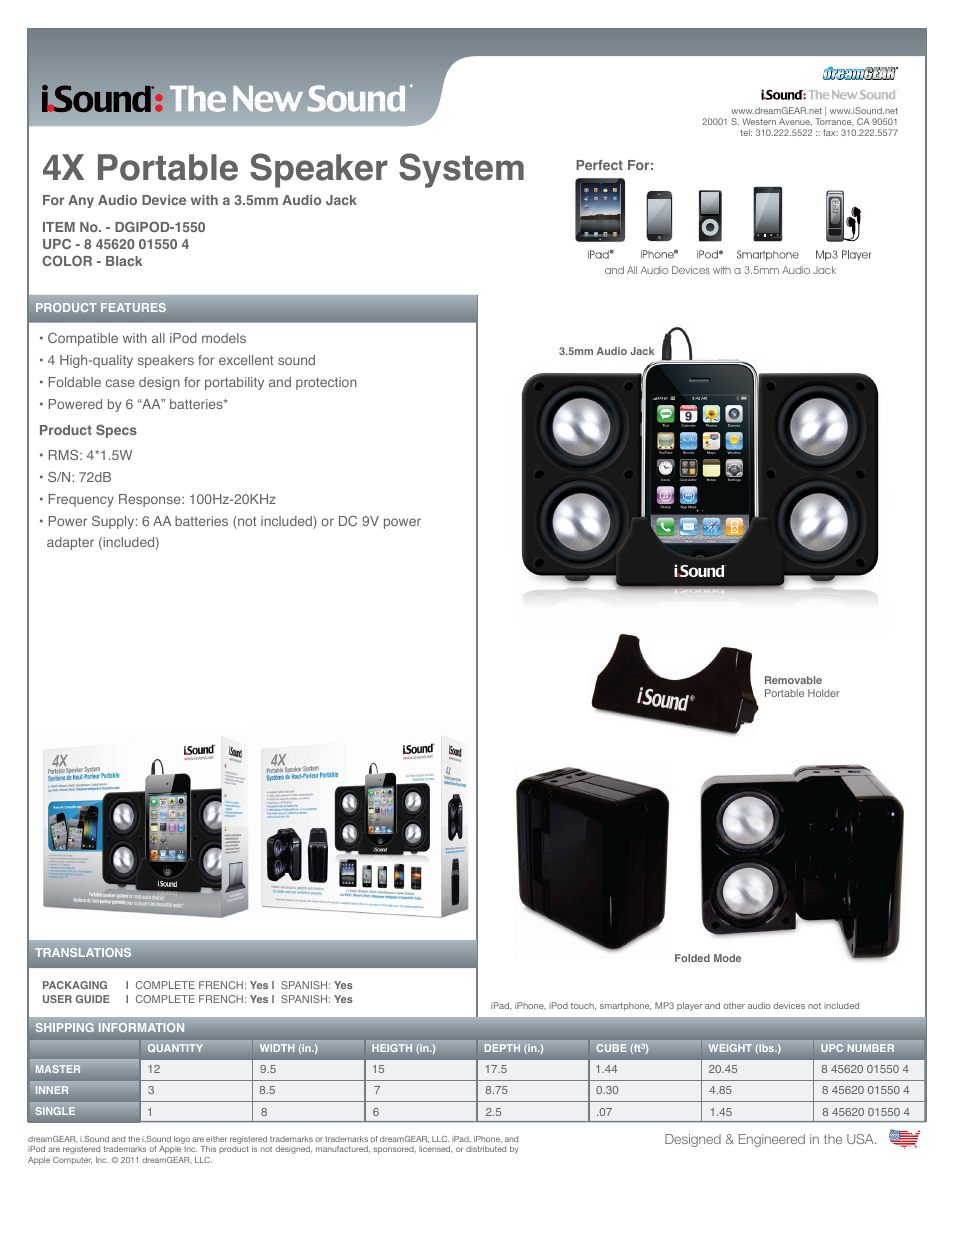 4X Portable Speaker SystemPortable Speaker System - Sell Sheet